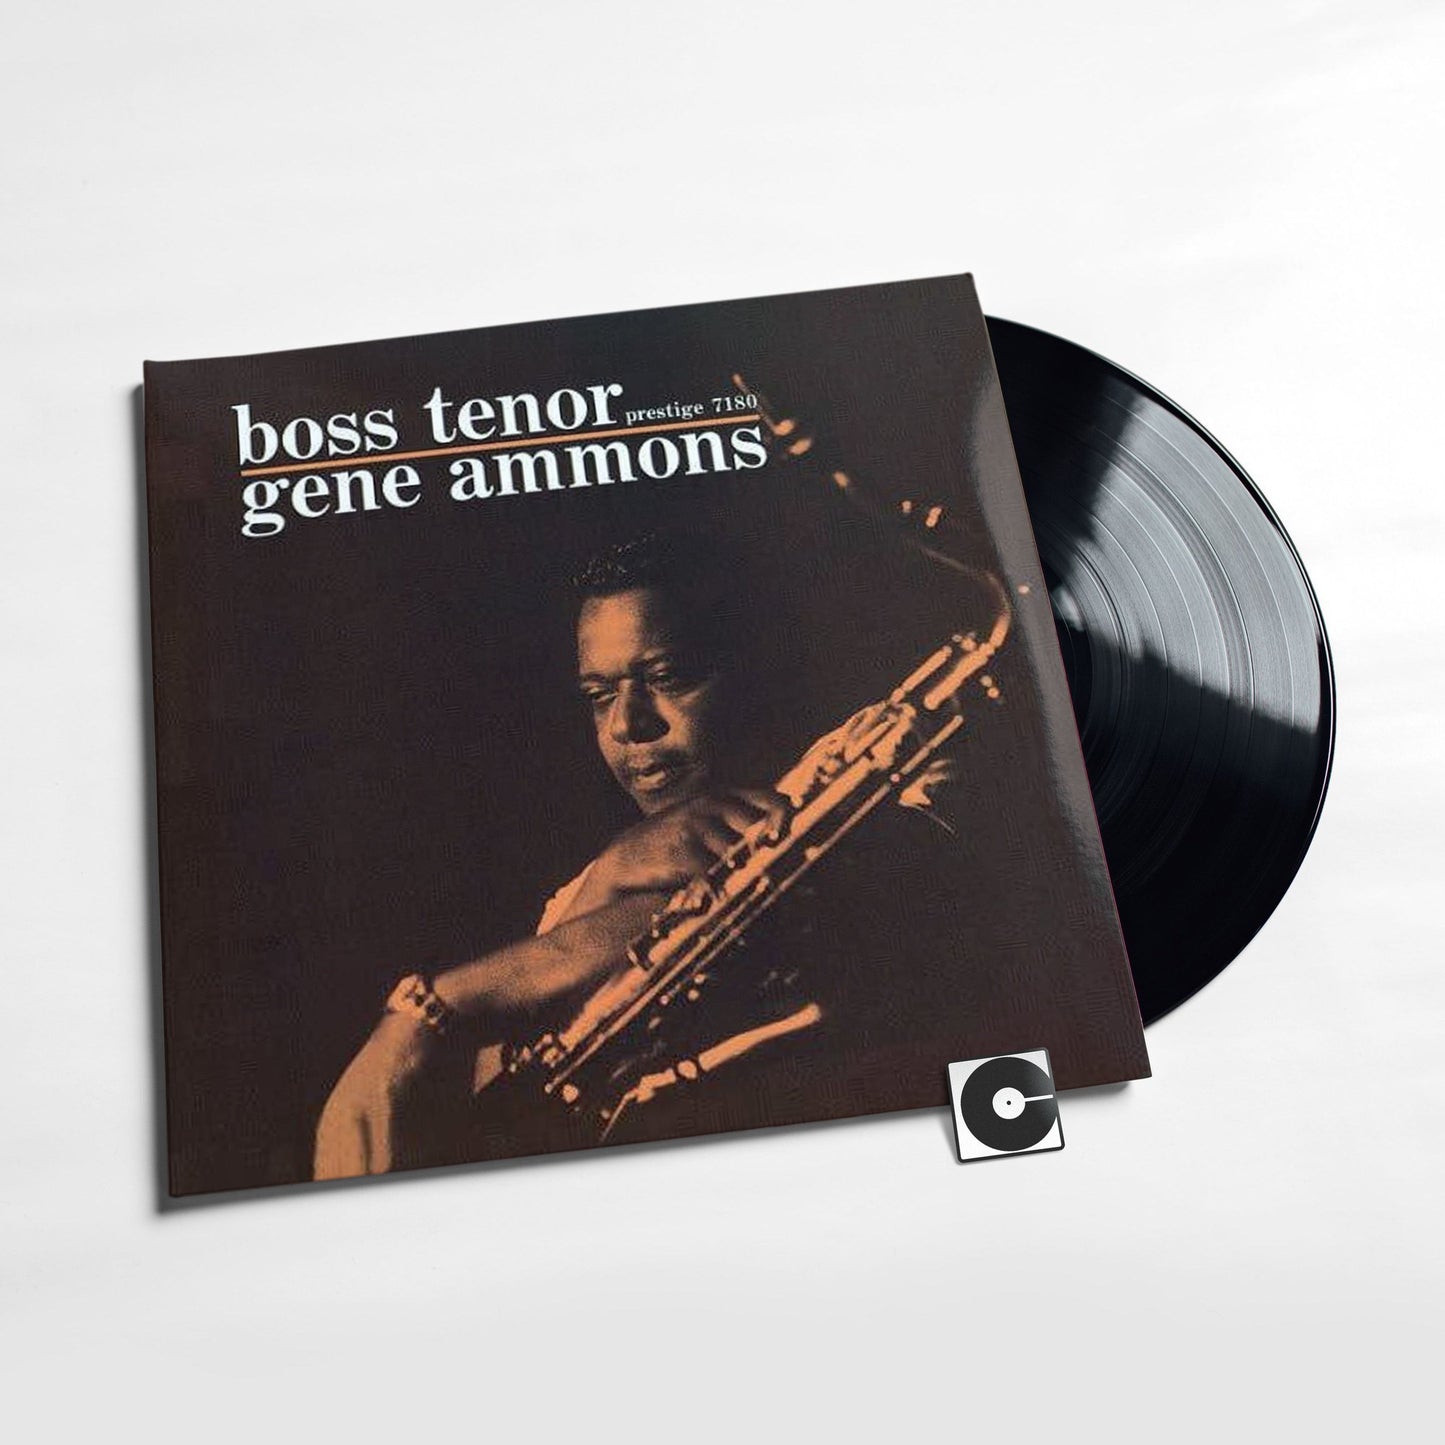 Gene Ammons - "Boss Tenor" Analogue Productions